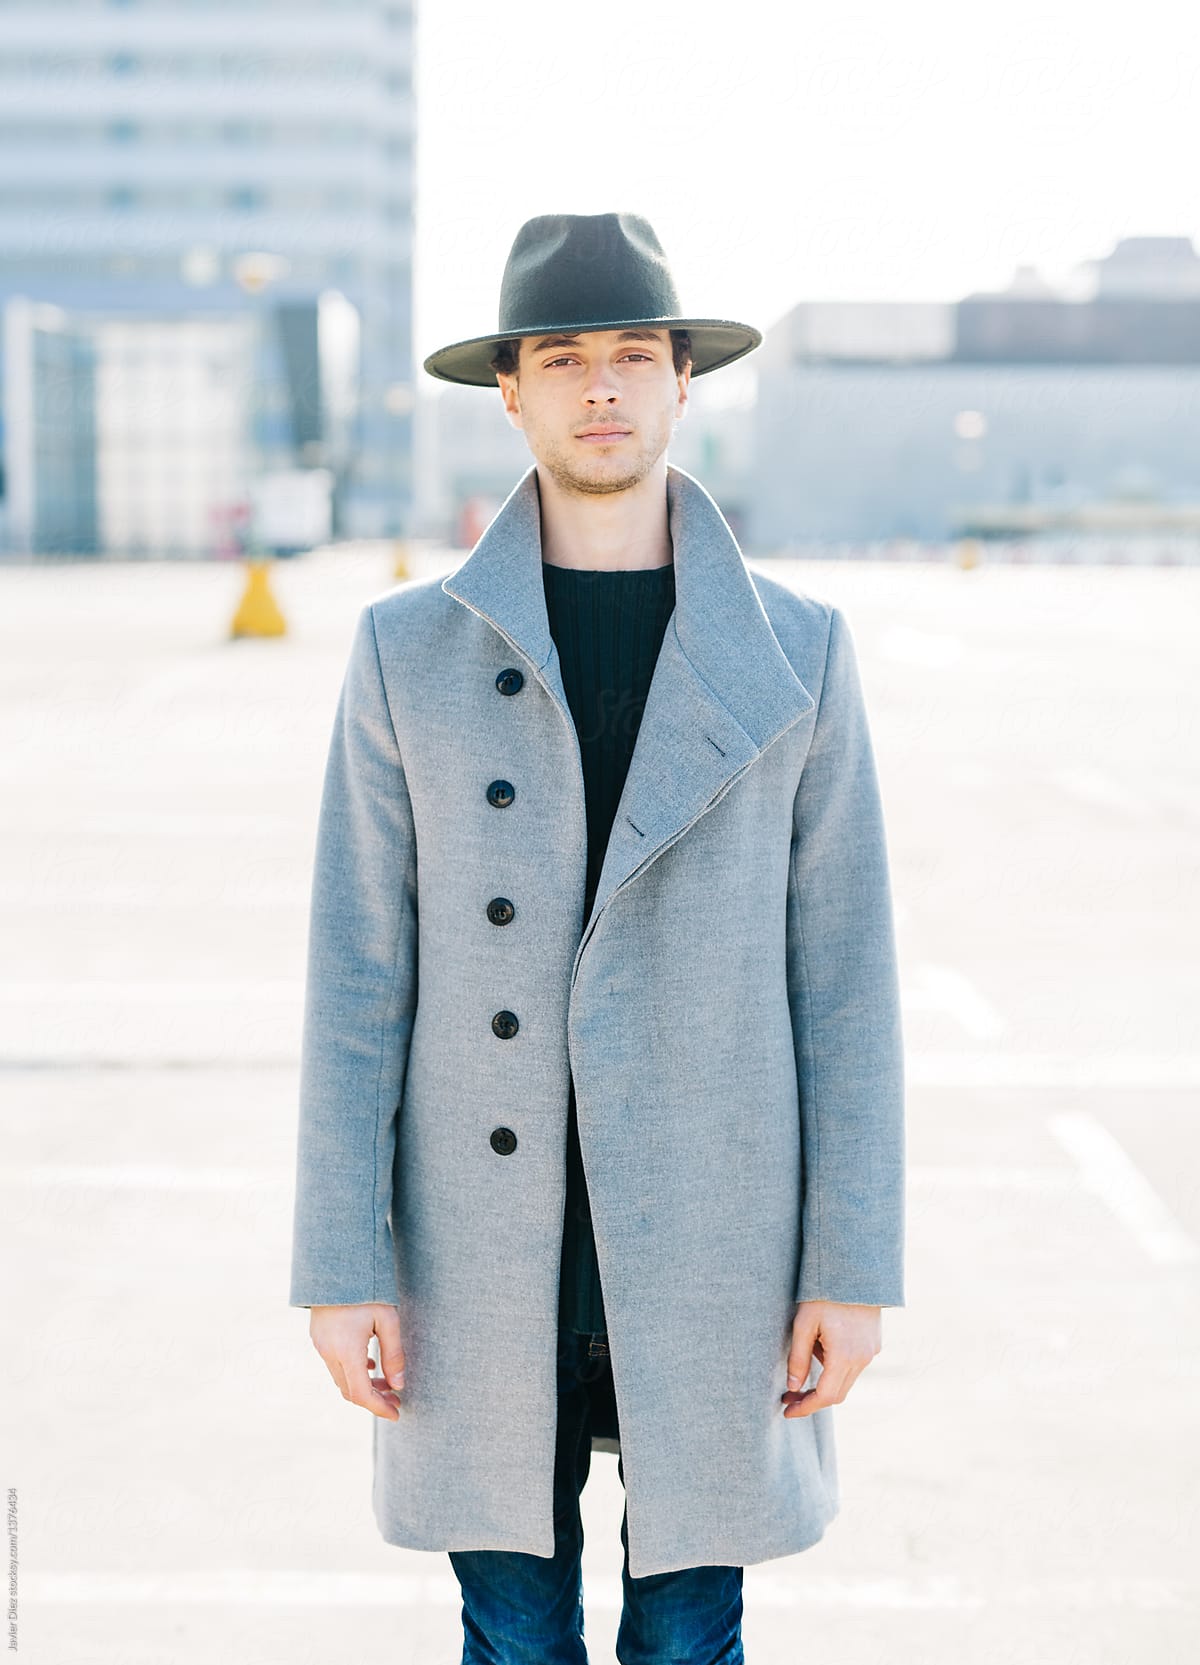 Young man wearing stylish coat